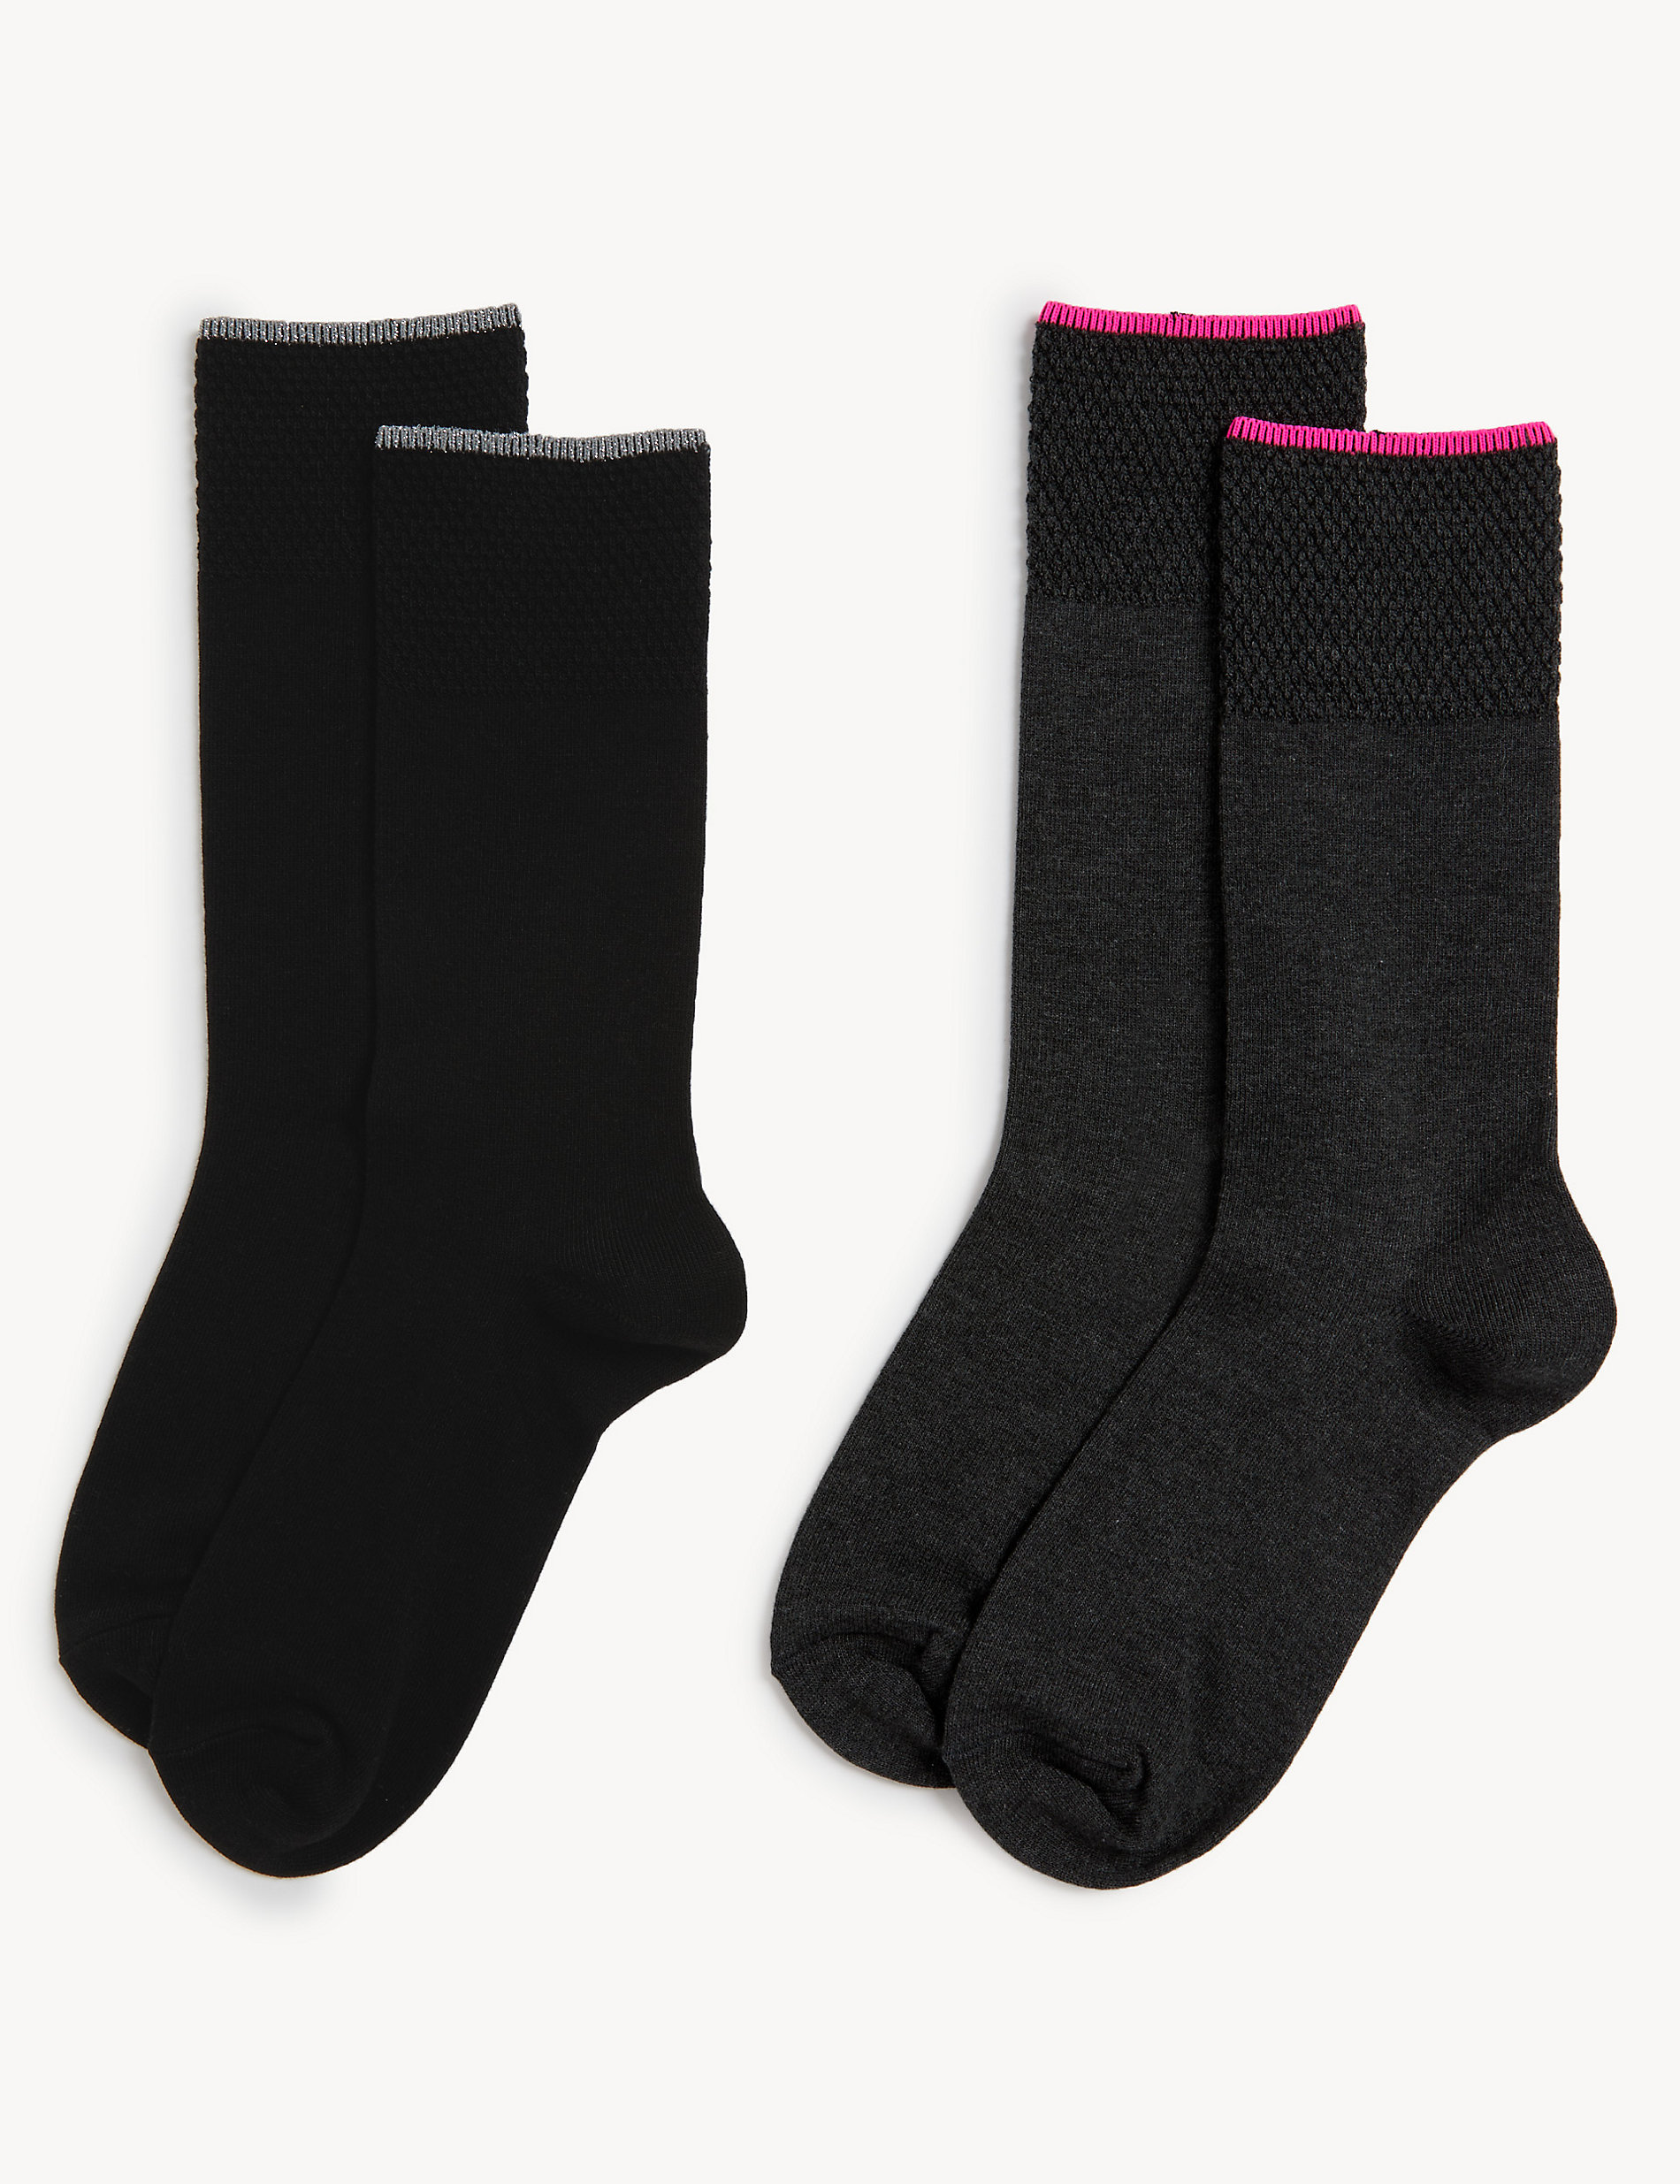 Pack de 2 pares de calcetines térmicos tipo bota